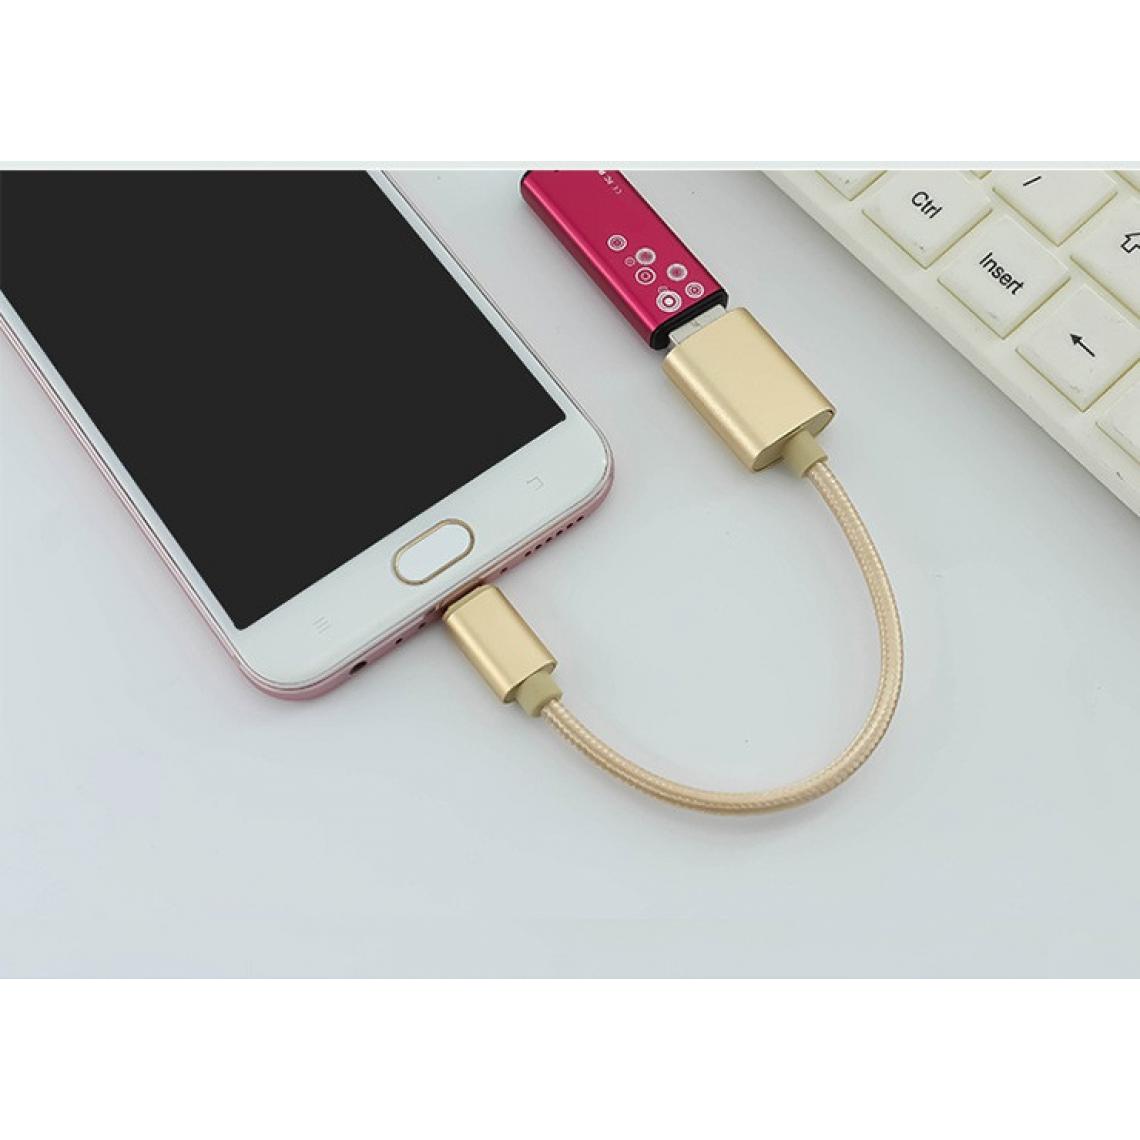 Shot - Adaptateur Type C/USB pour OPPO Reno2 Smartphone & MAC USB-C Clef (OR) - Autres accessoires smartphone